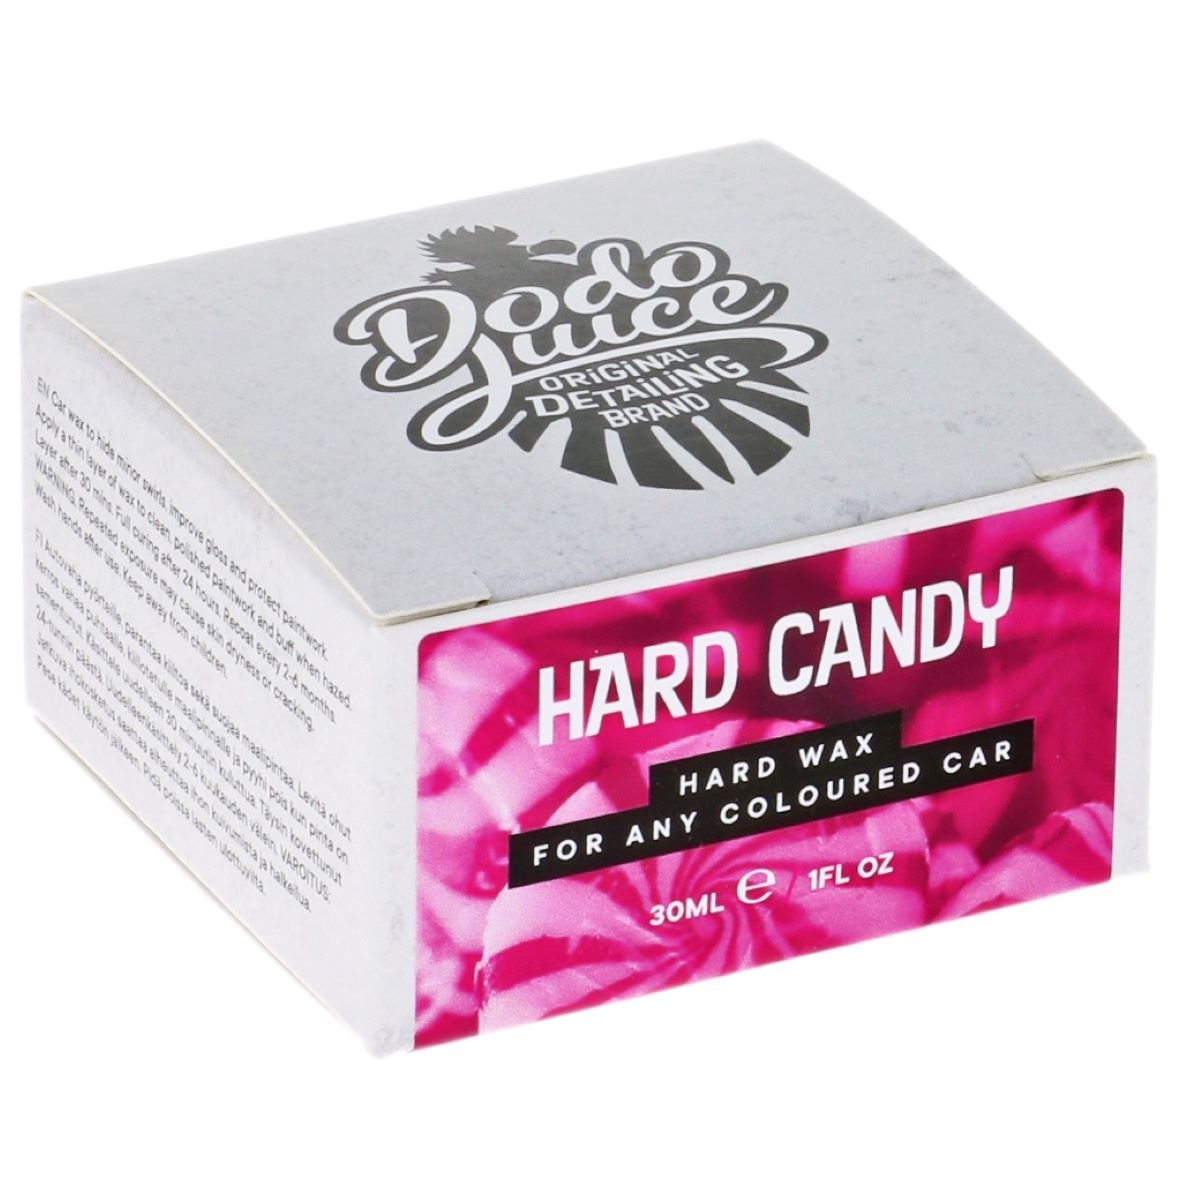 Hard Candy hard wax for any coloured car - 30ml